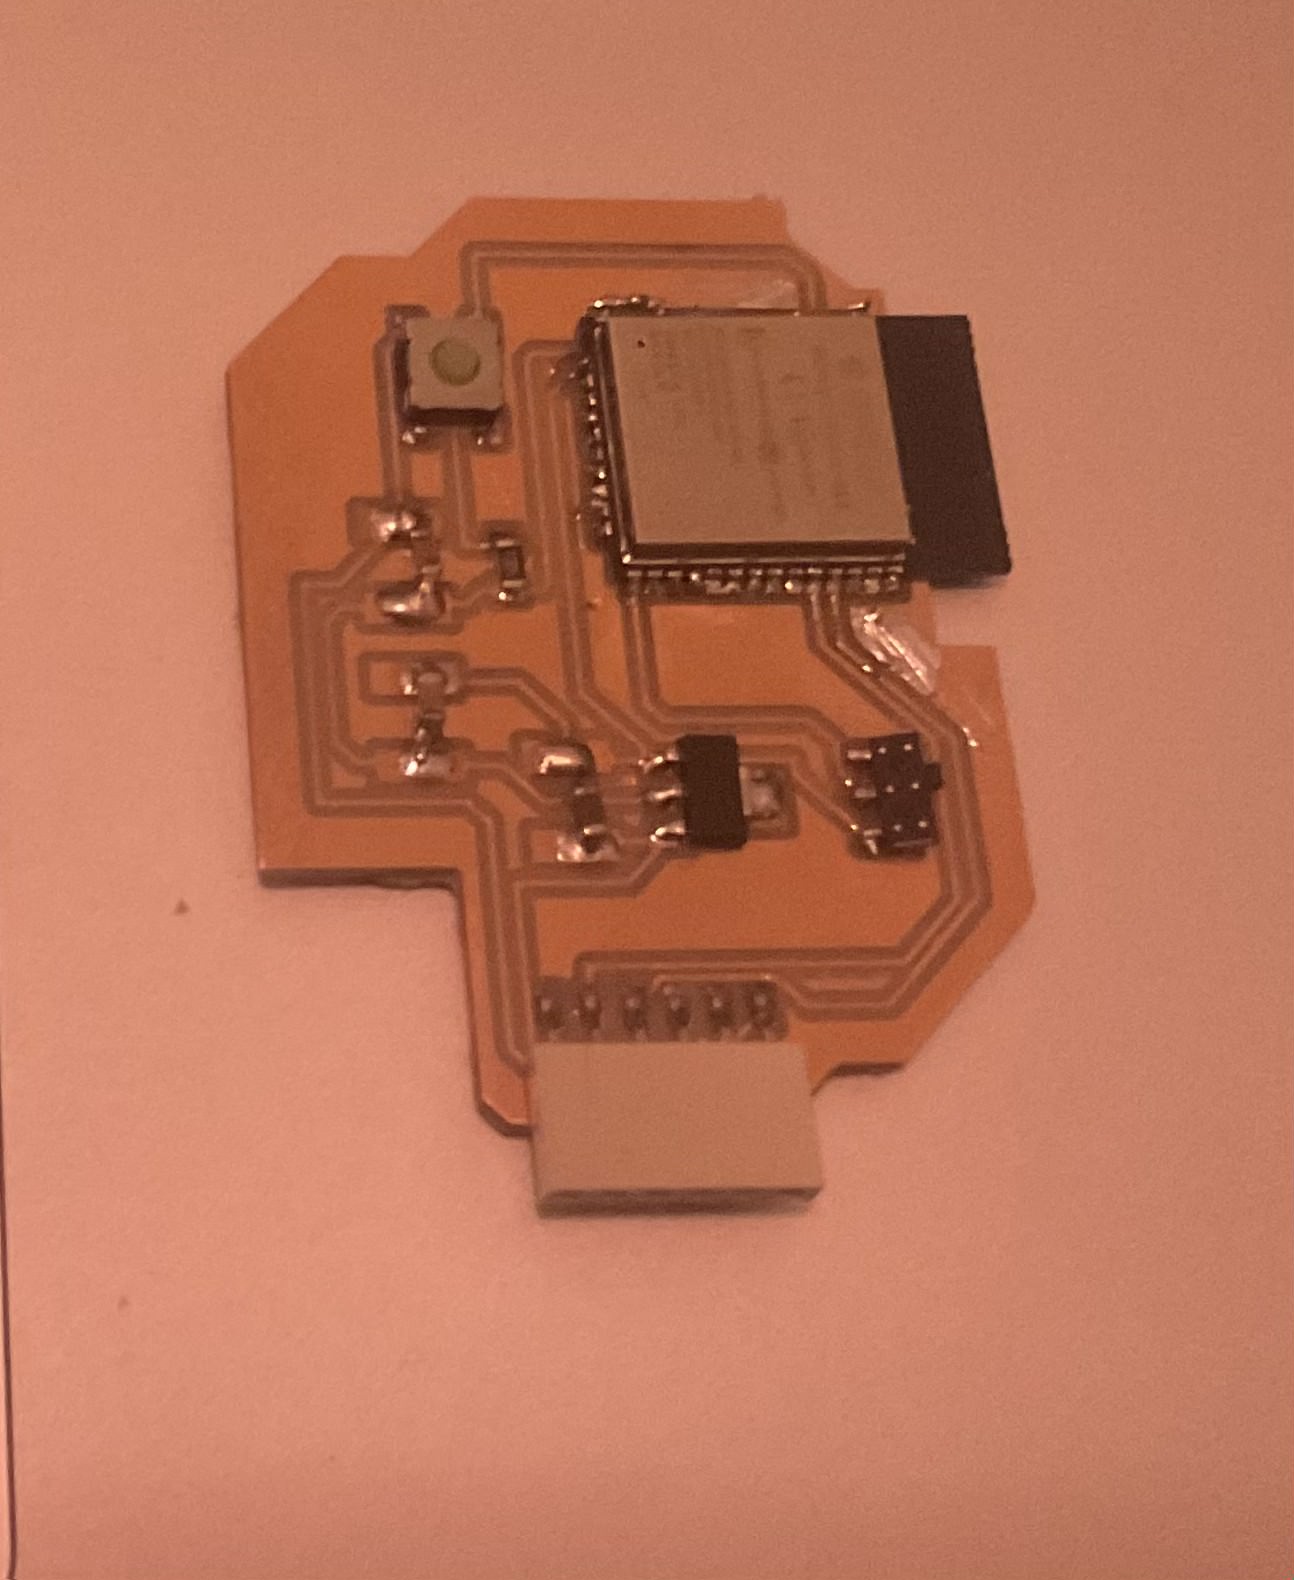 my soldered board :)